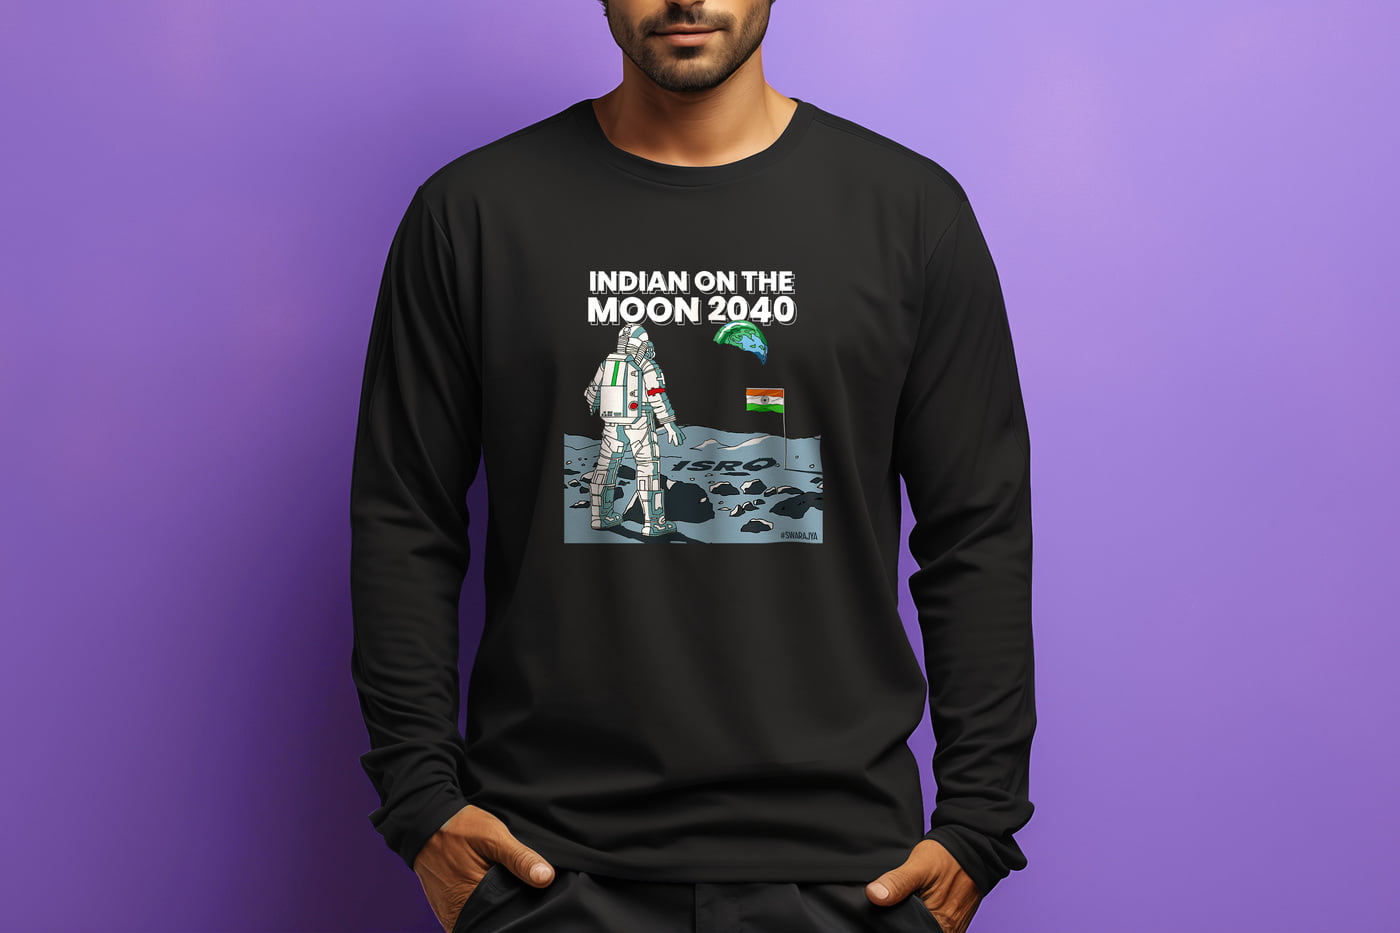 Man On The Moon - Full Sleeve T-shirt